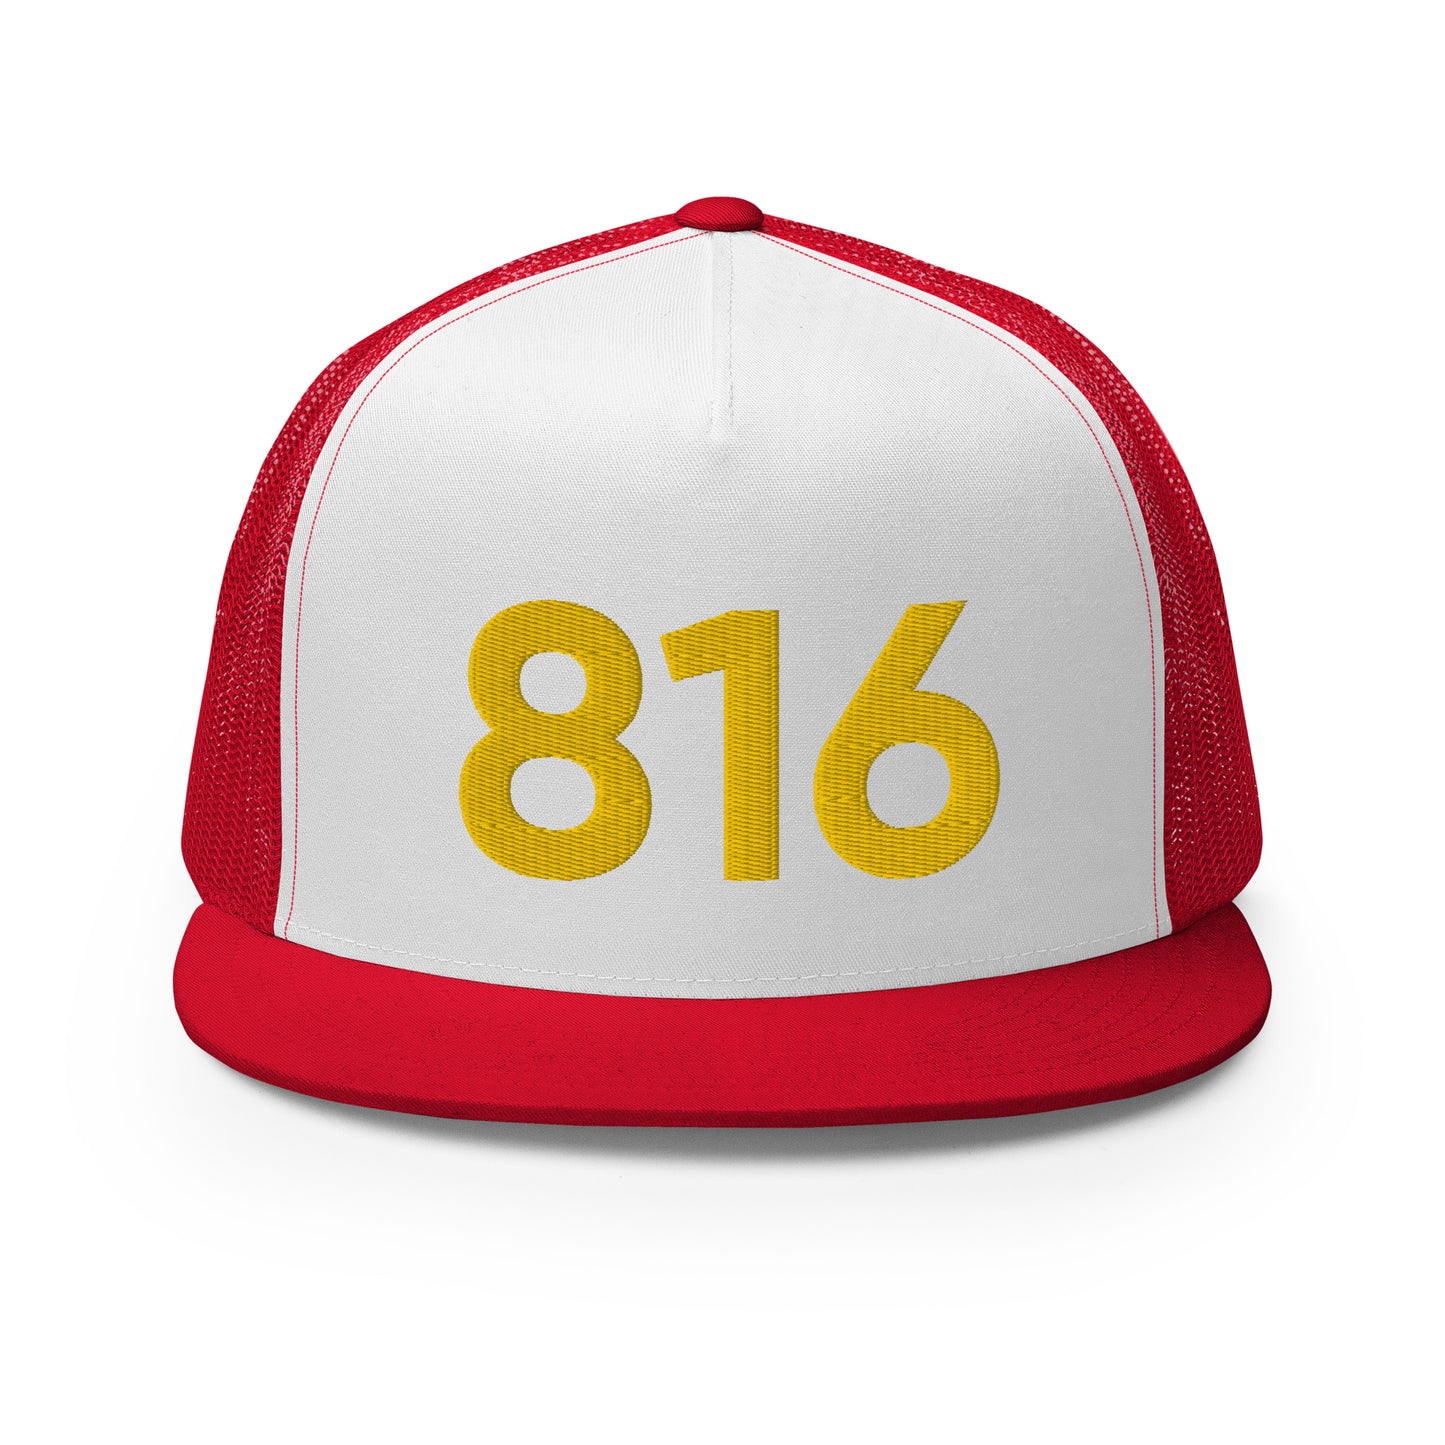 816 Kansas City Strong Trucker Hat